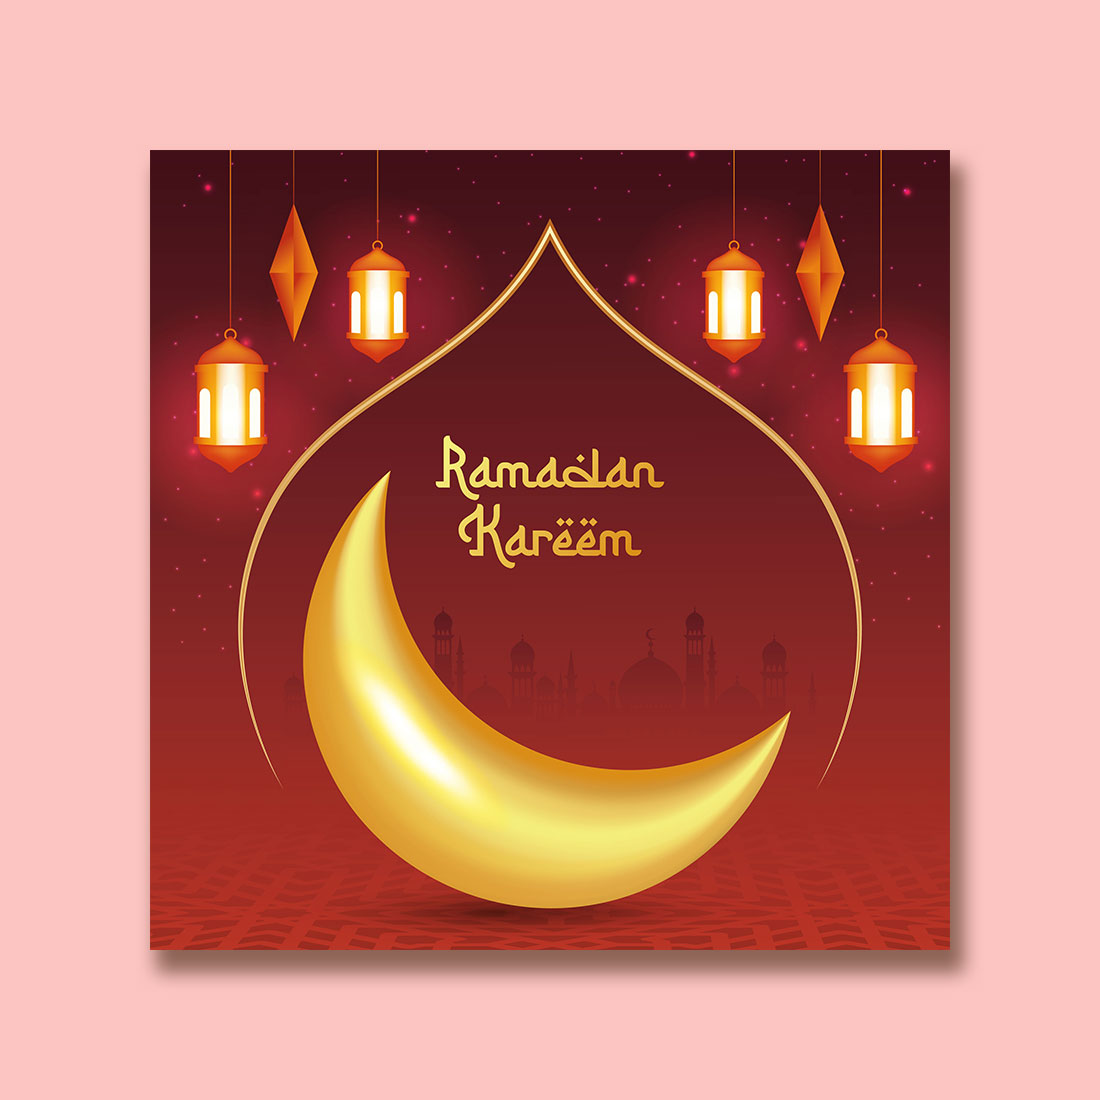 Ramadan Kareem greeting card with Islamic background preview image.